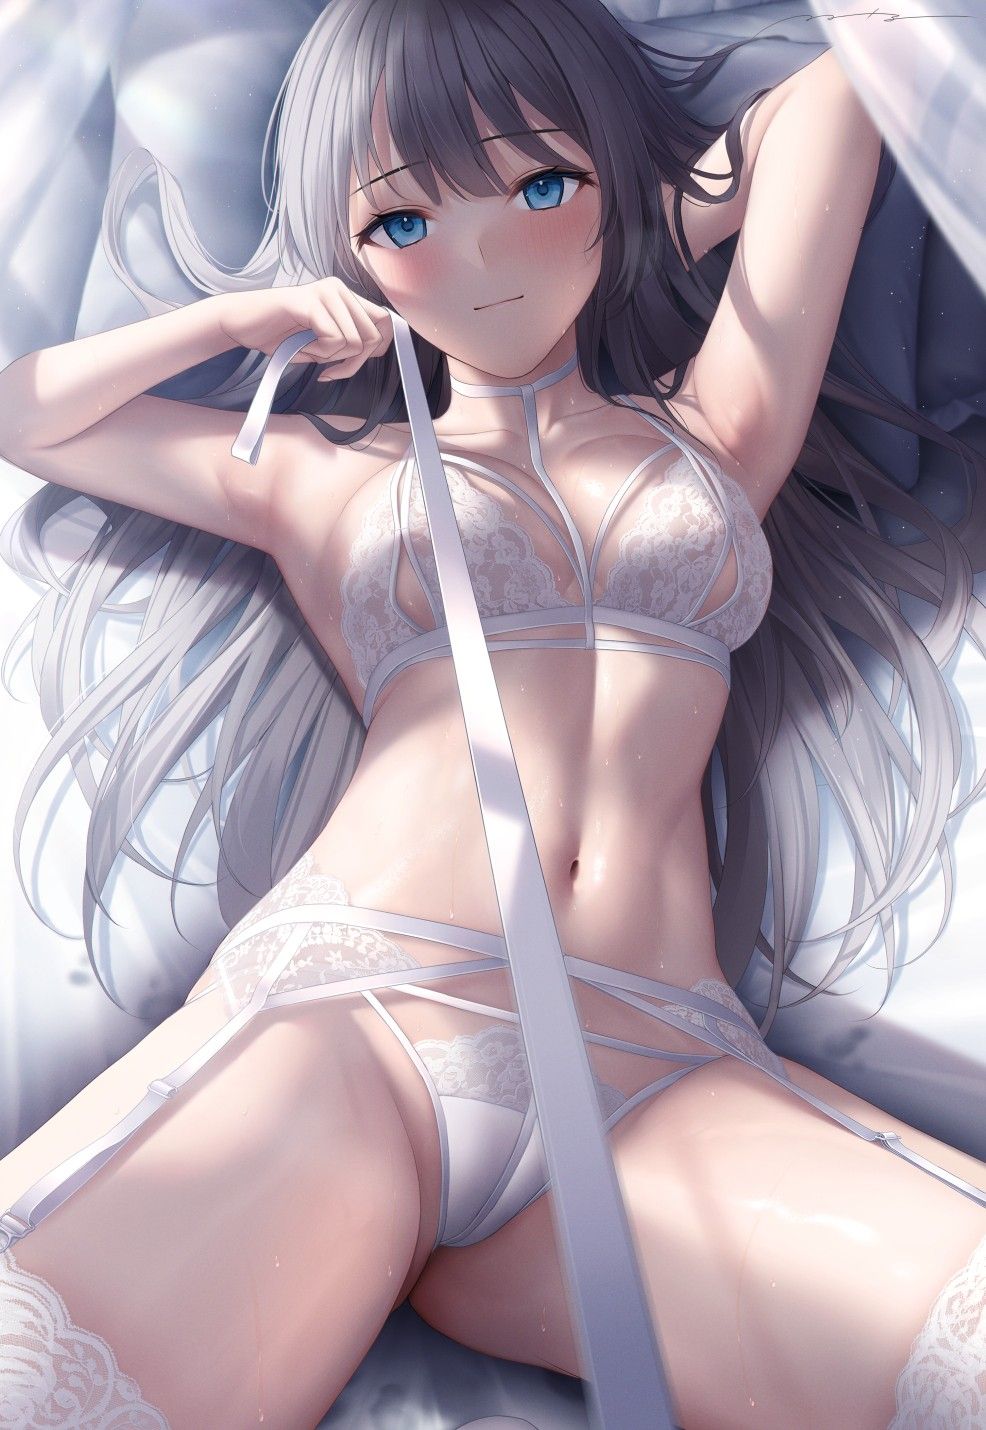 【2nd】Erotic image of a girl wearing a garter belt Part 40 9